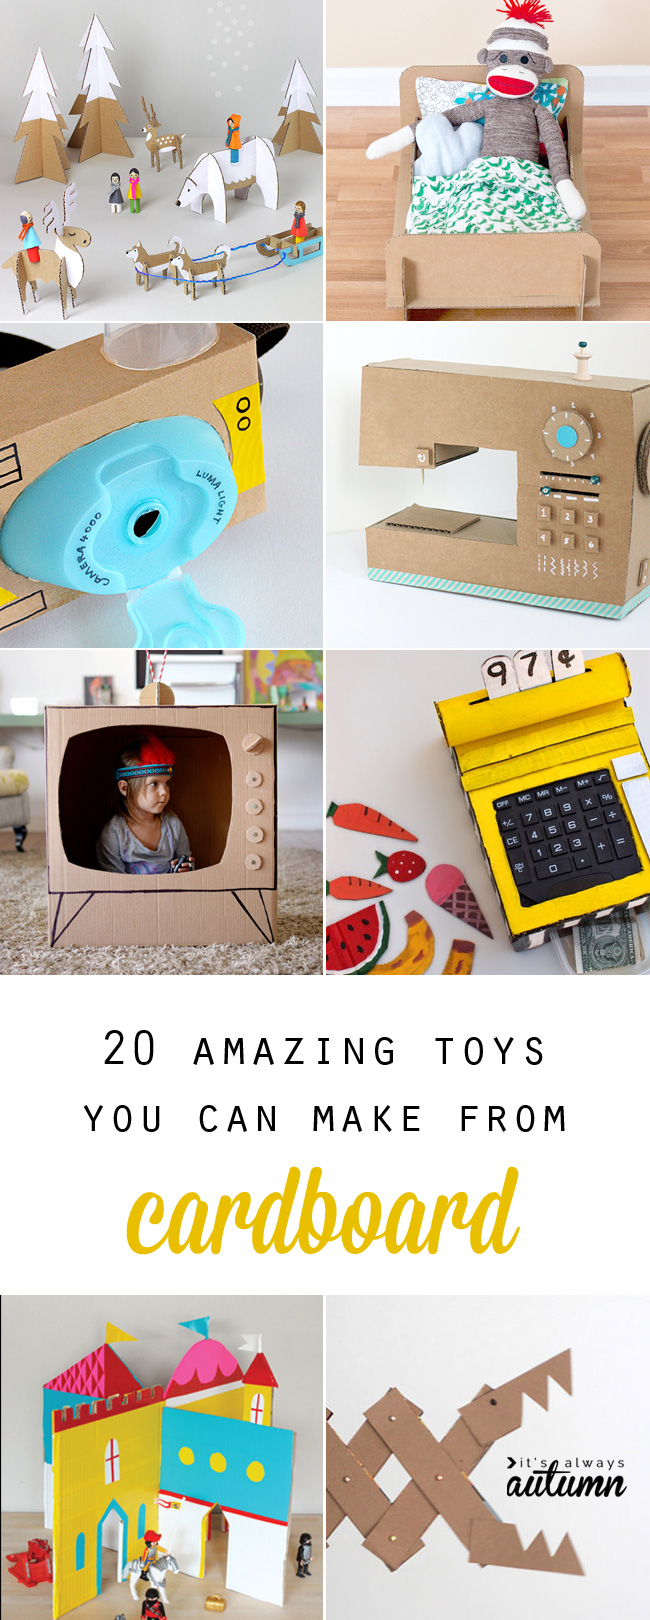 Alternative Gift Ideas: Craft Box - Red Ted Art - Kids Crafts